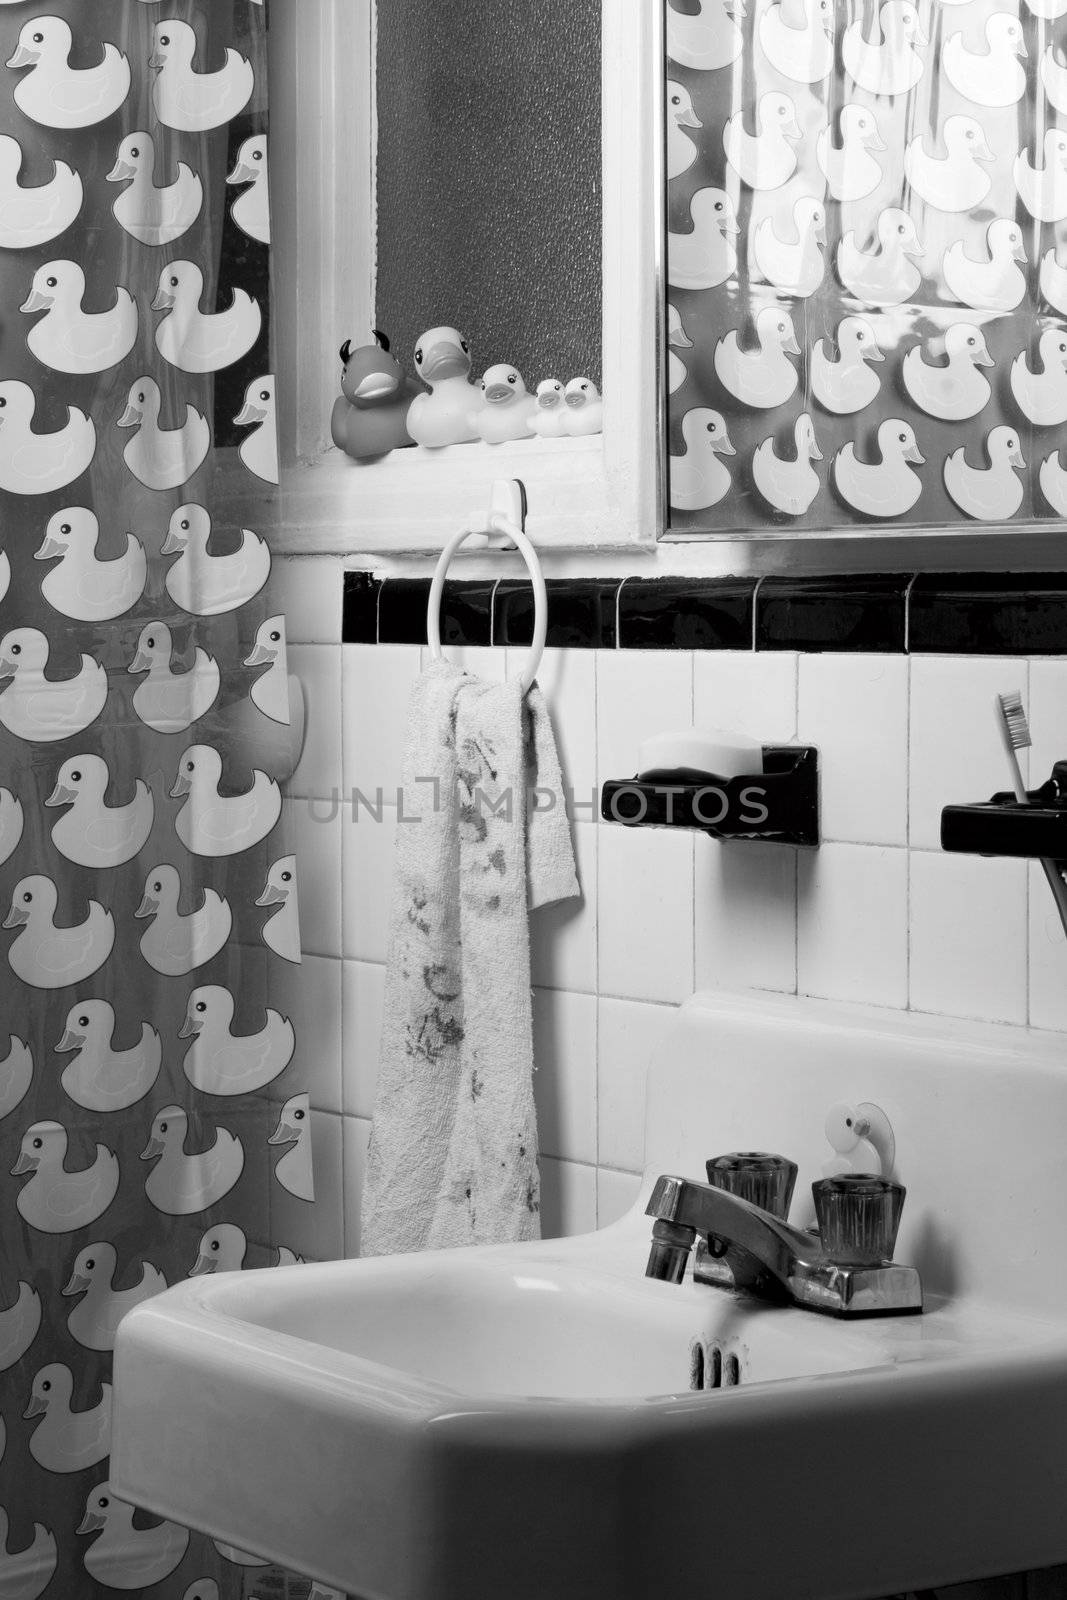 Rubber duck bathroom by mypstudio